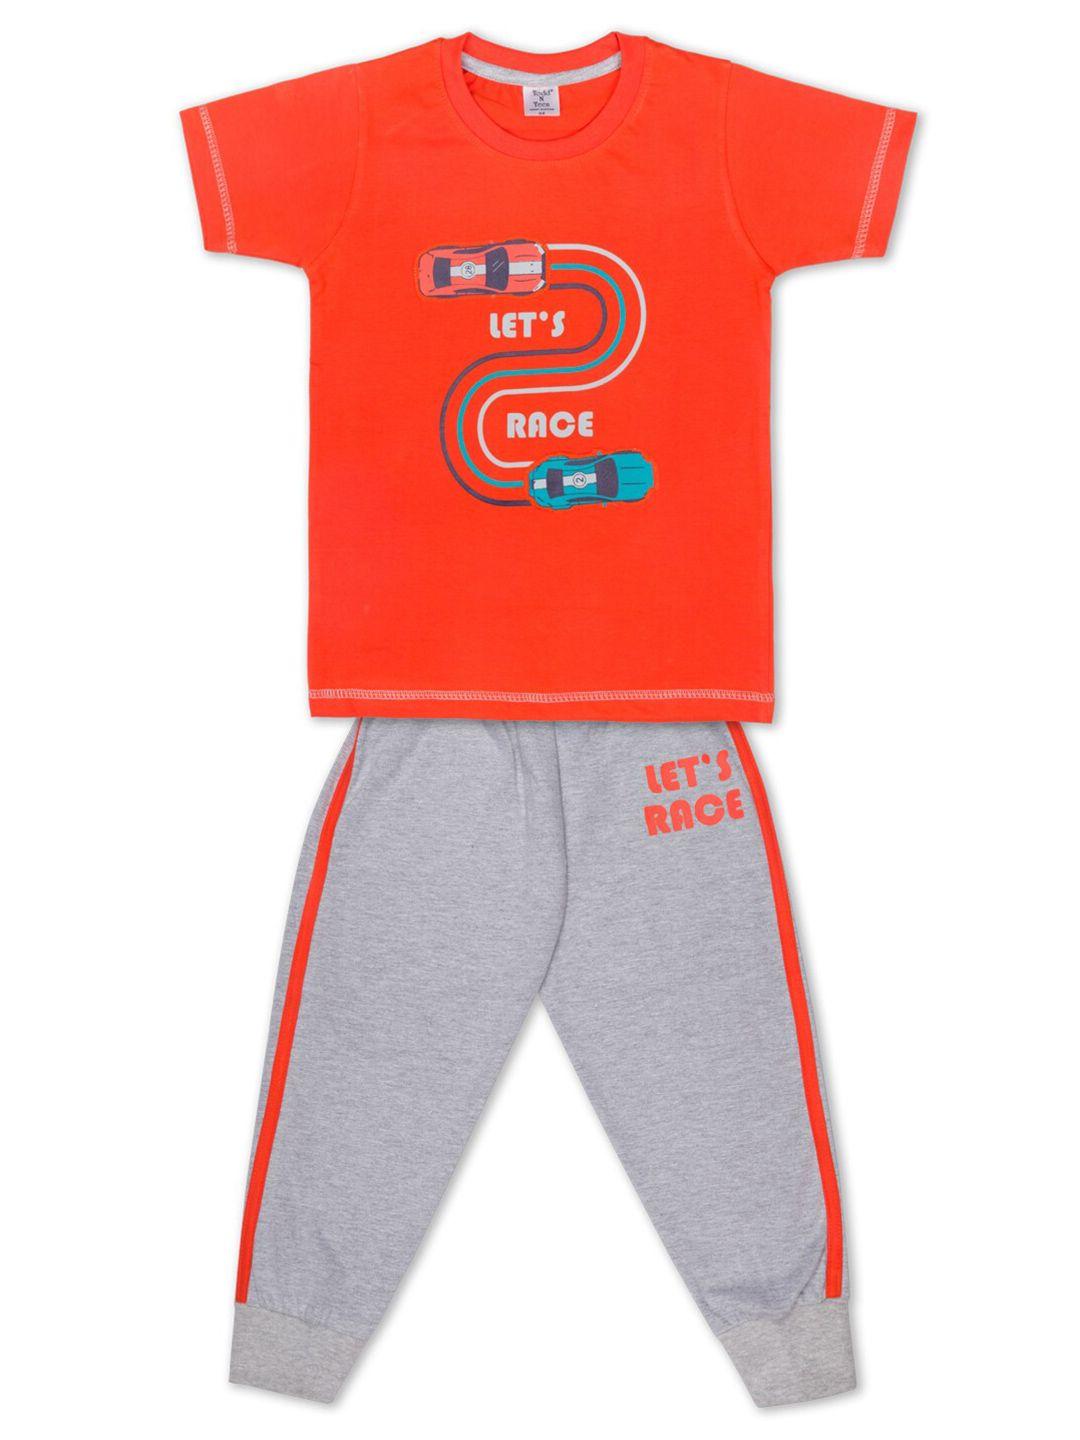 todd n teen boys orange & grey printed short sleeve clothing set set